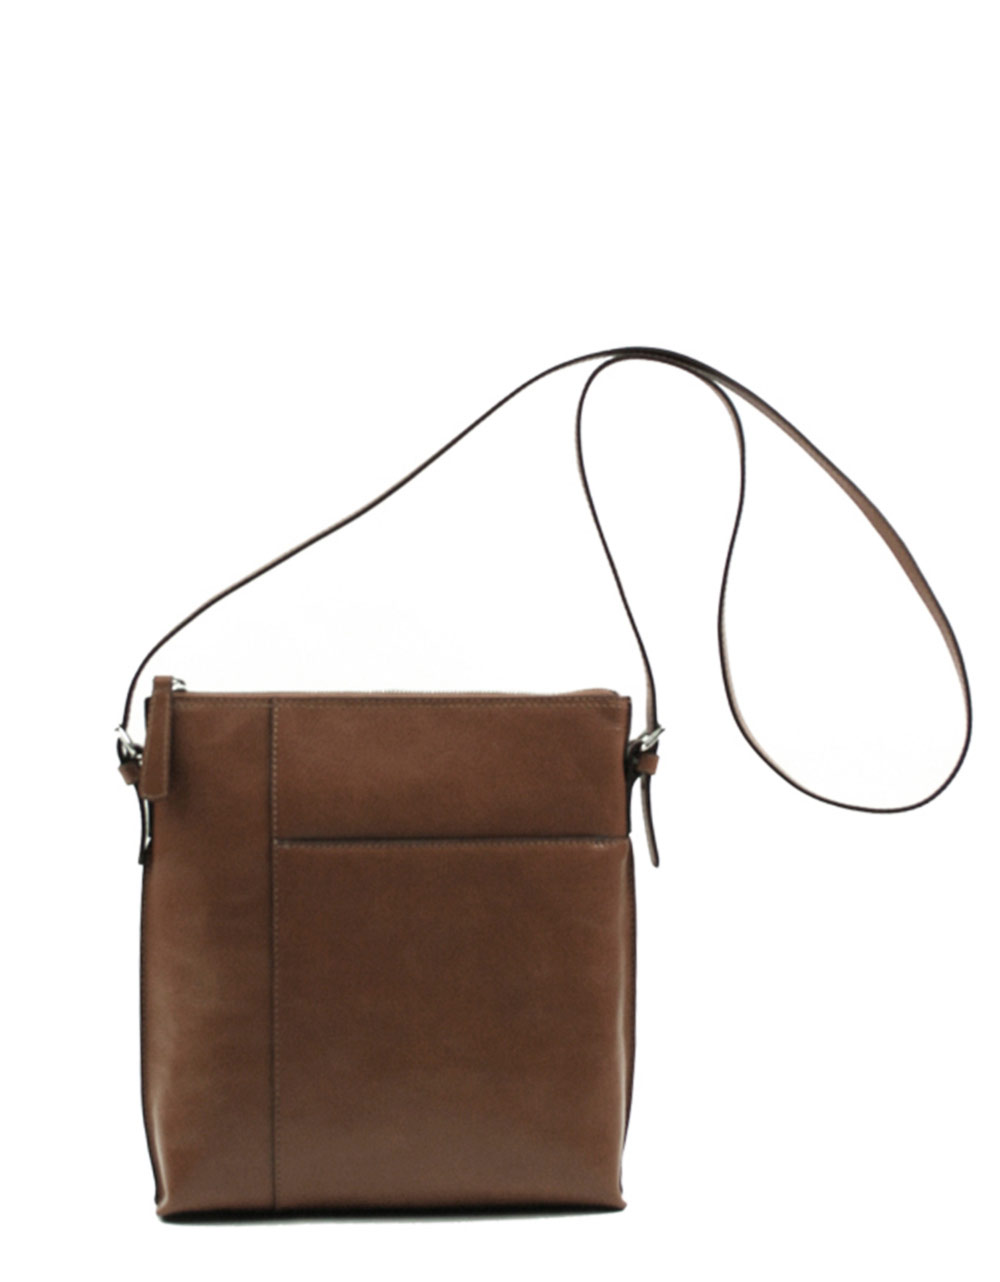 Hobo international Alessa Leather Cross-body Bag in Brown | Lyst